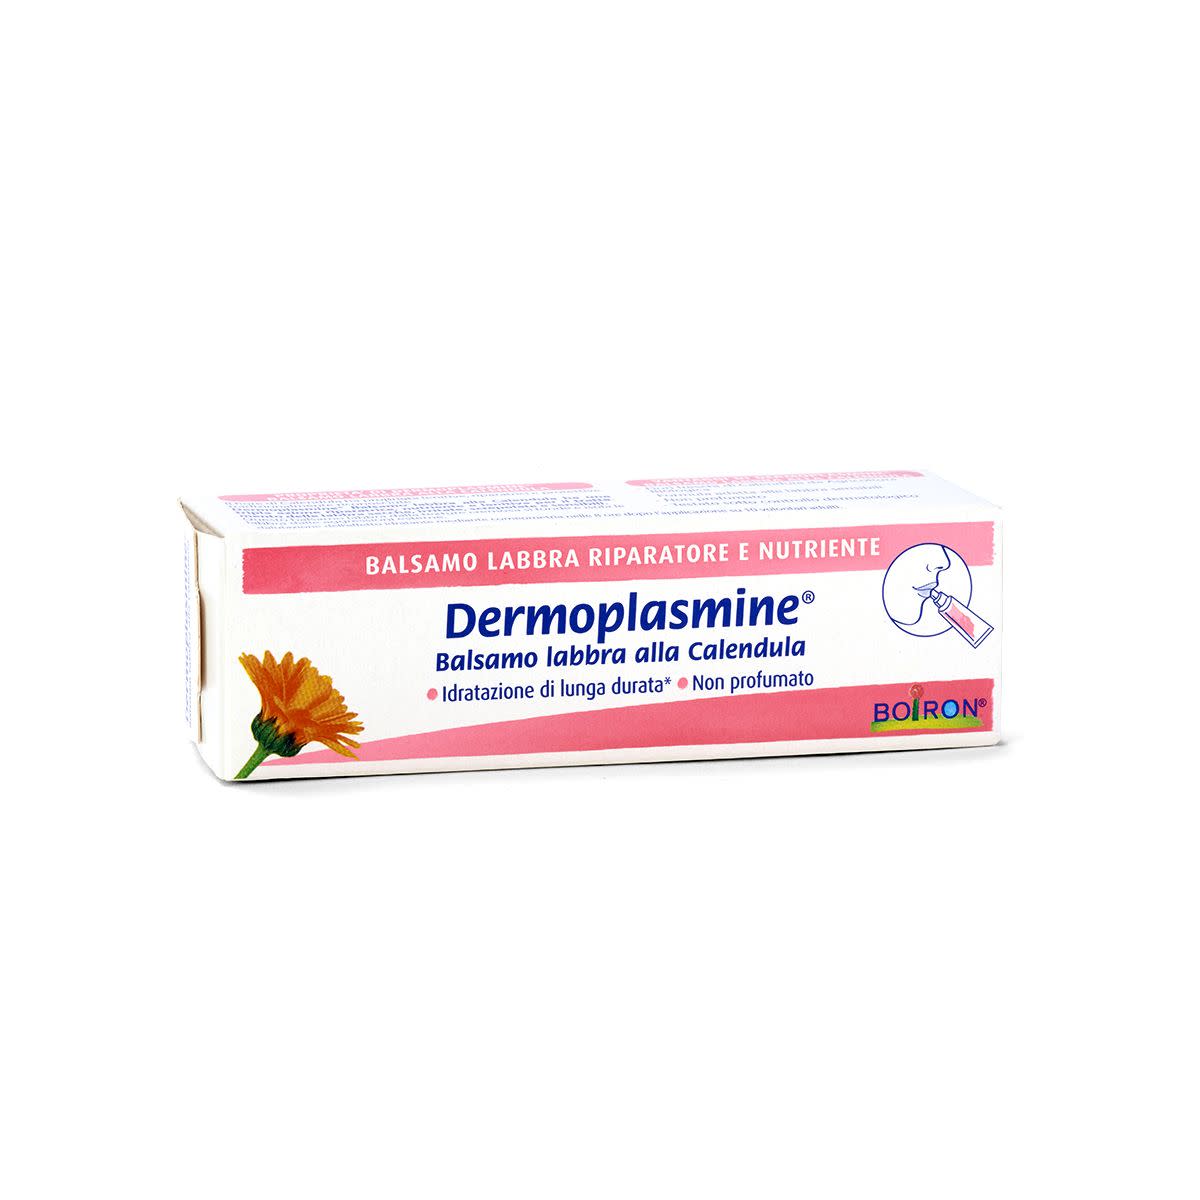 981554532 - Boiron Dermoplasmine Balsamo Labbra riparatore e nutriente 10g - 4709031_2.jpg